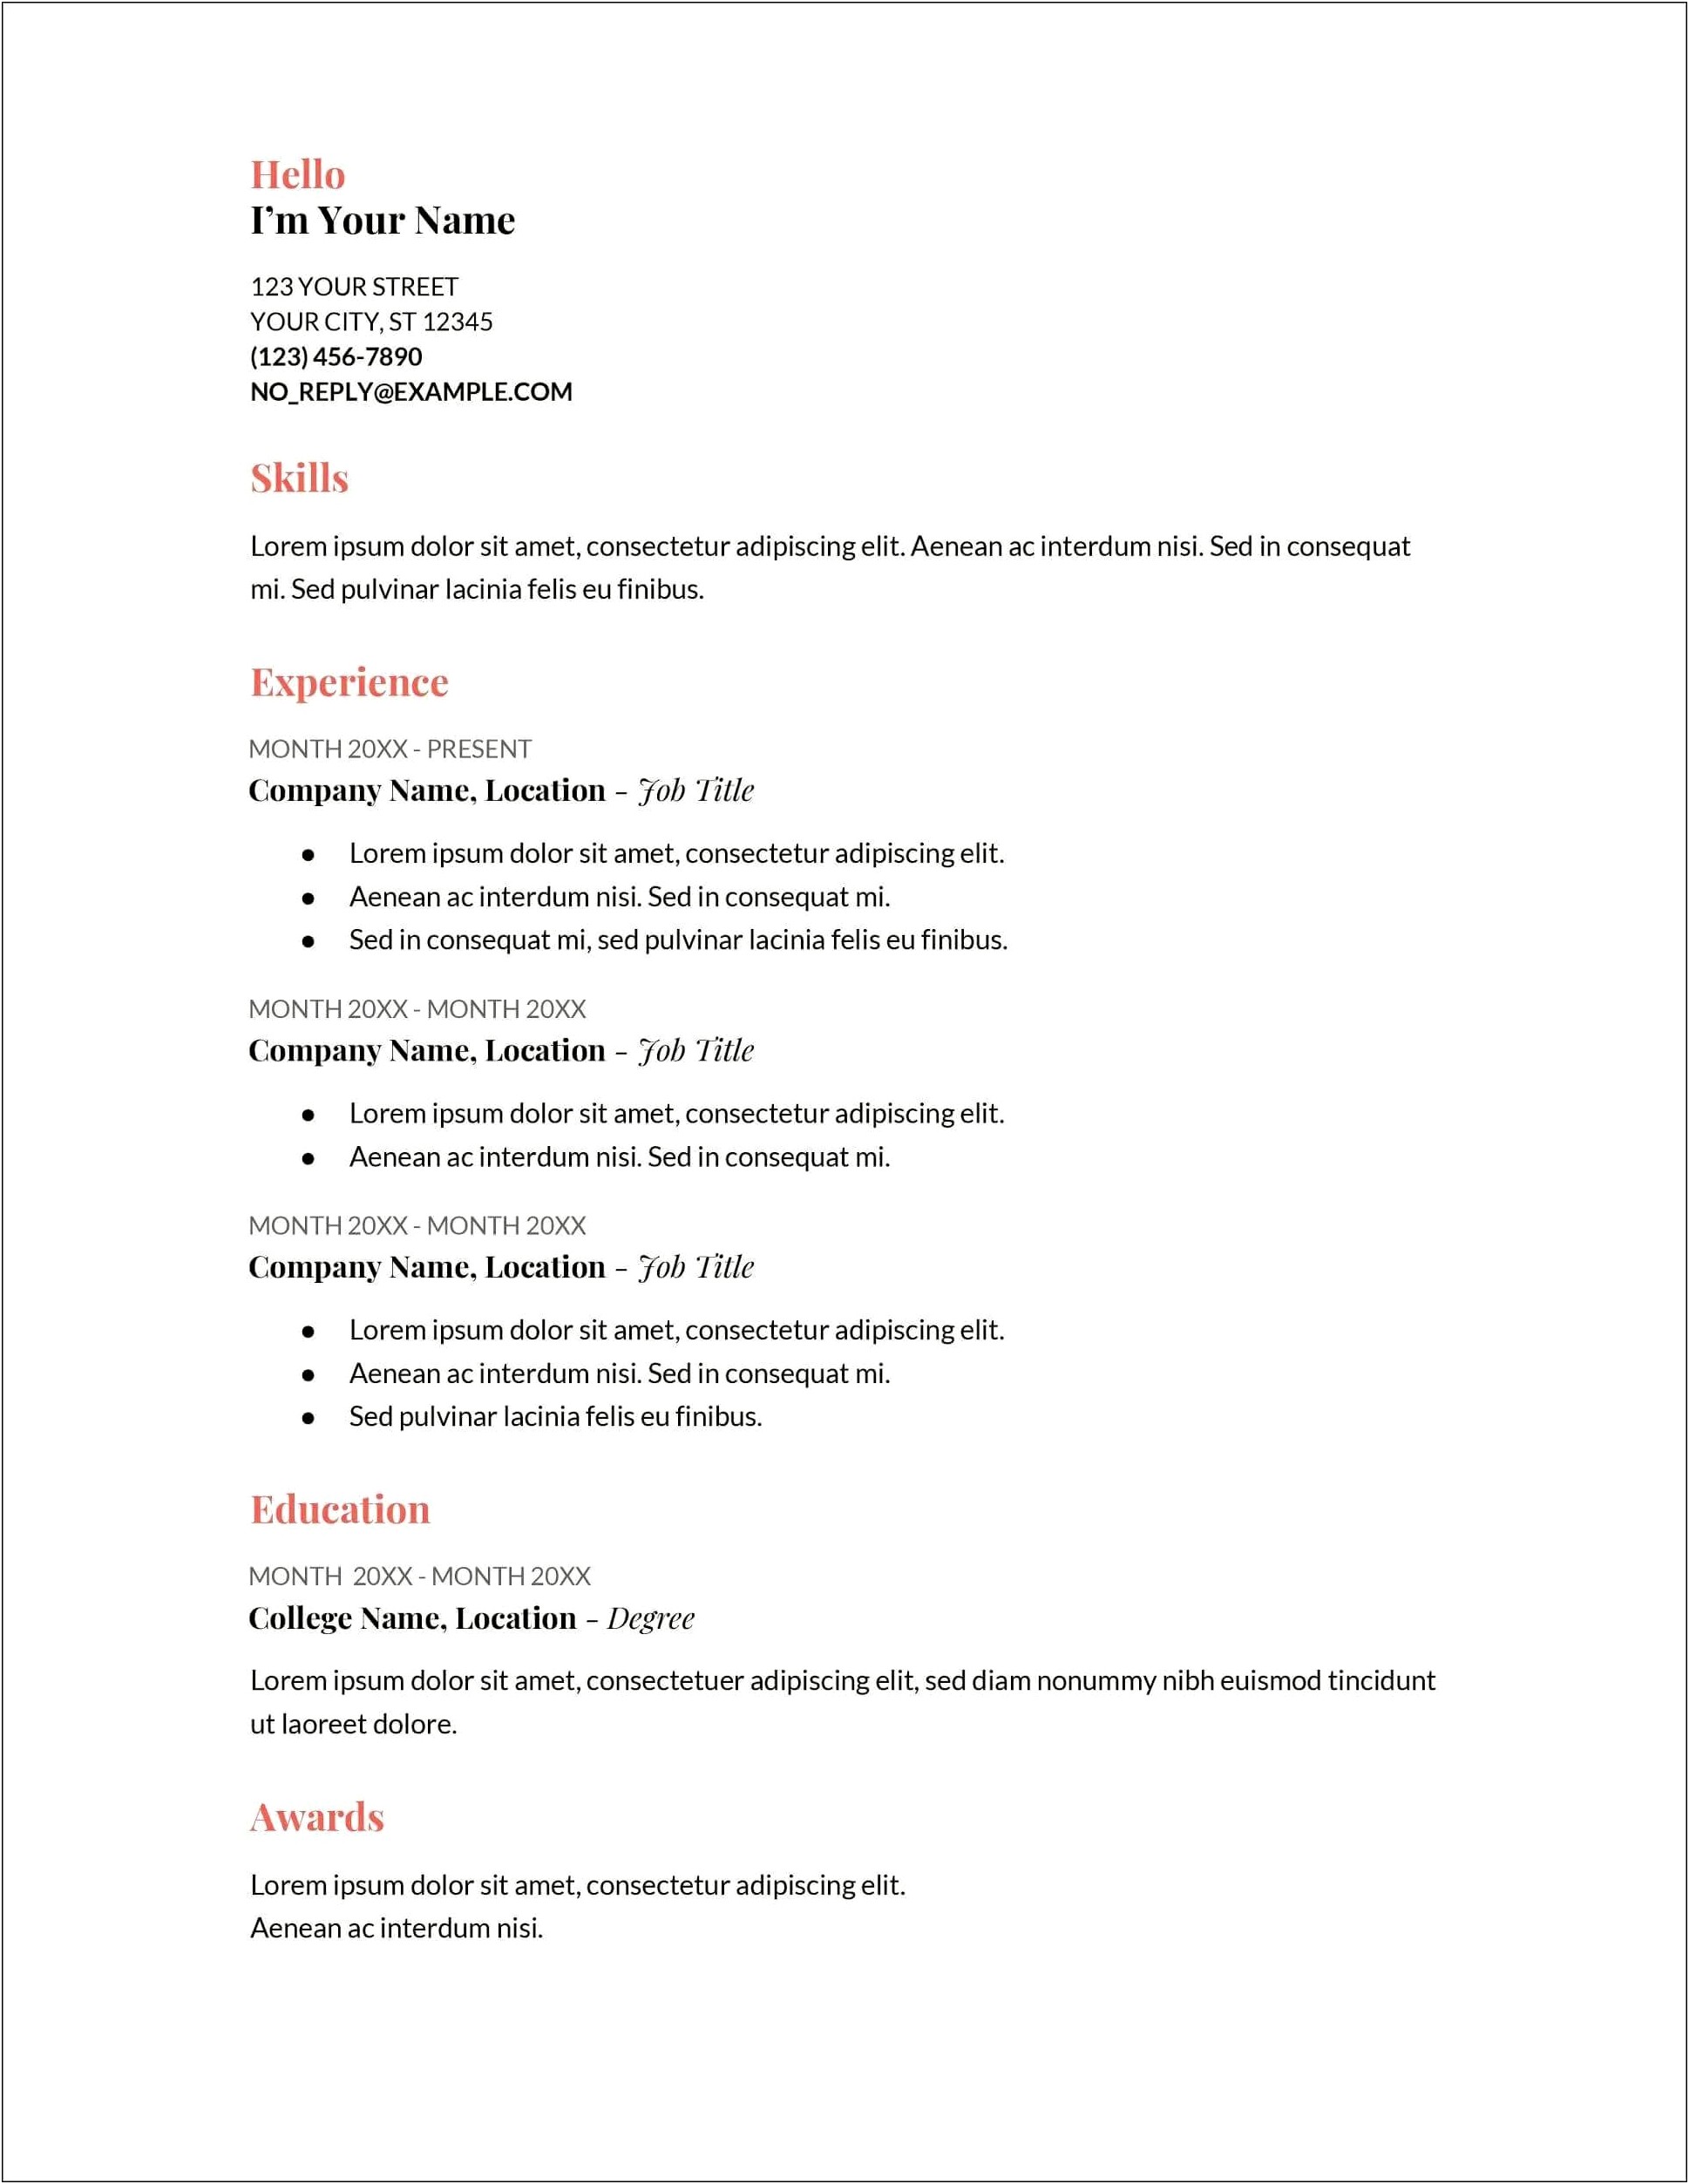 Sample Resume Format For Job Application Pdf